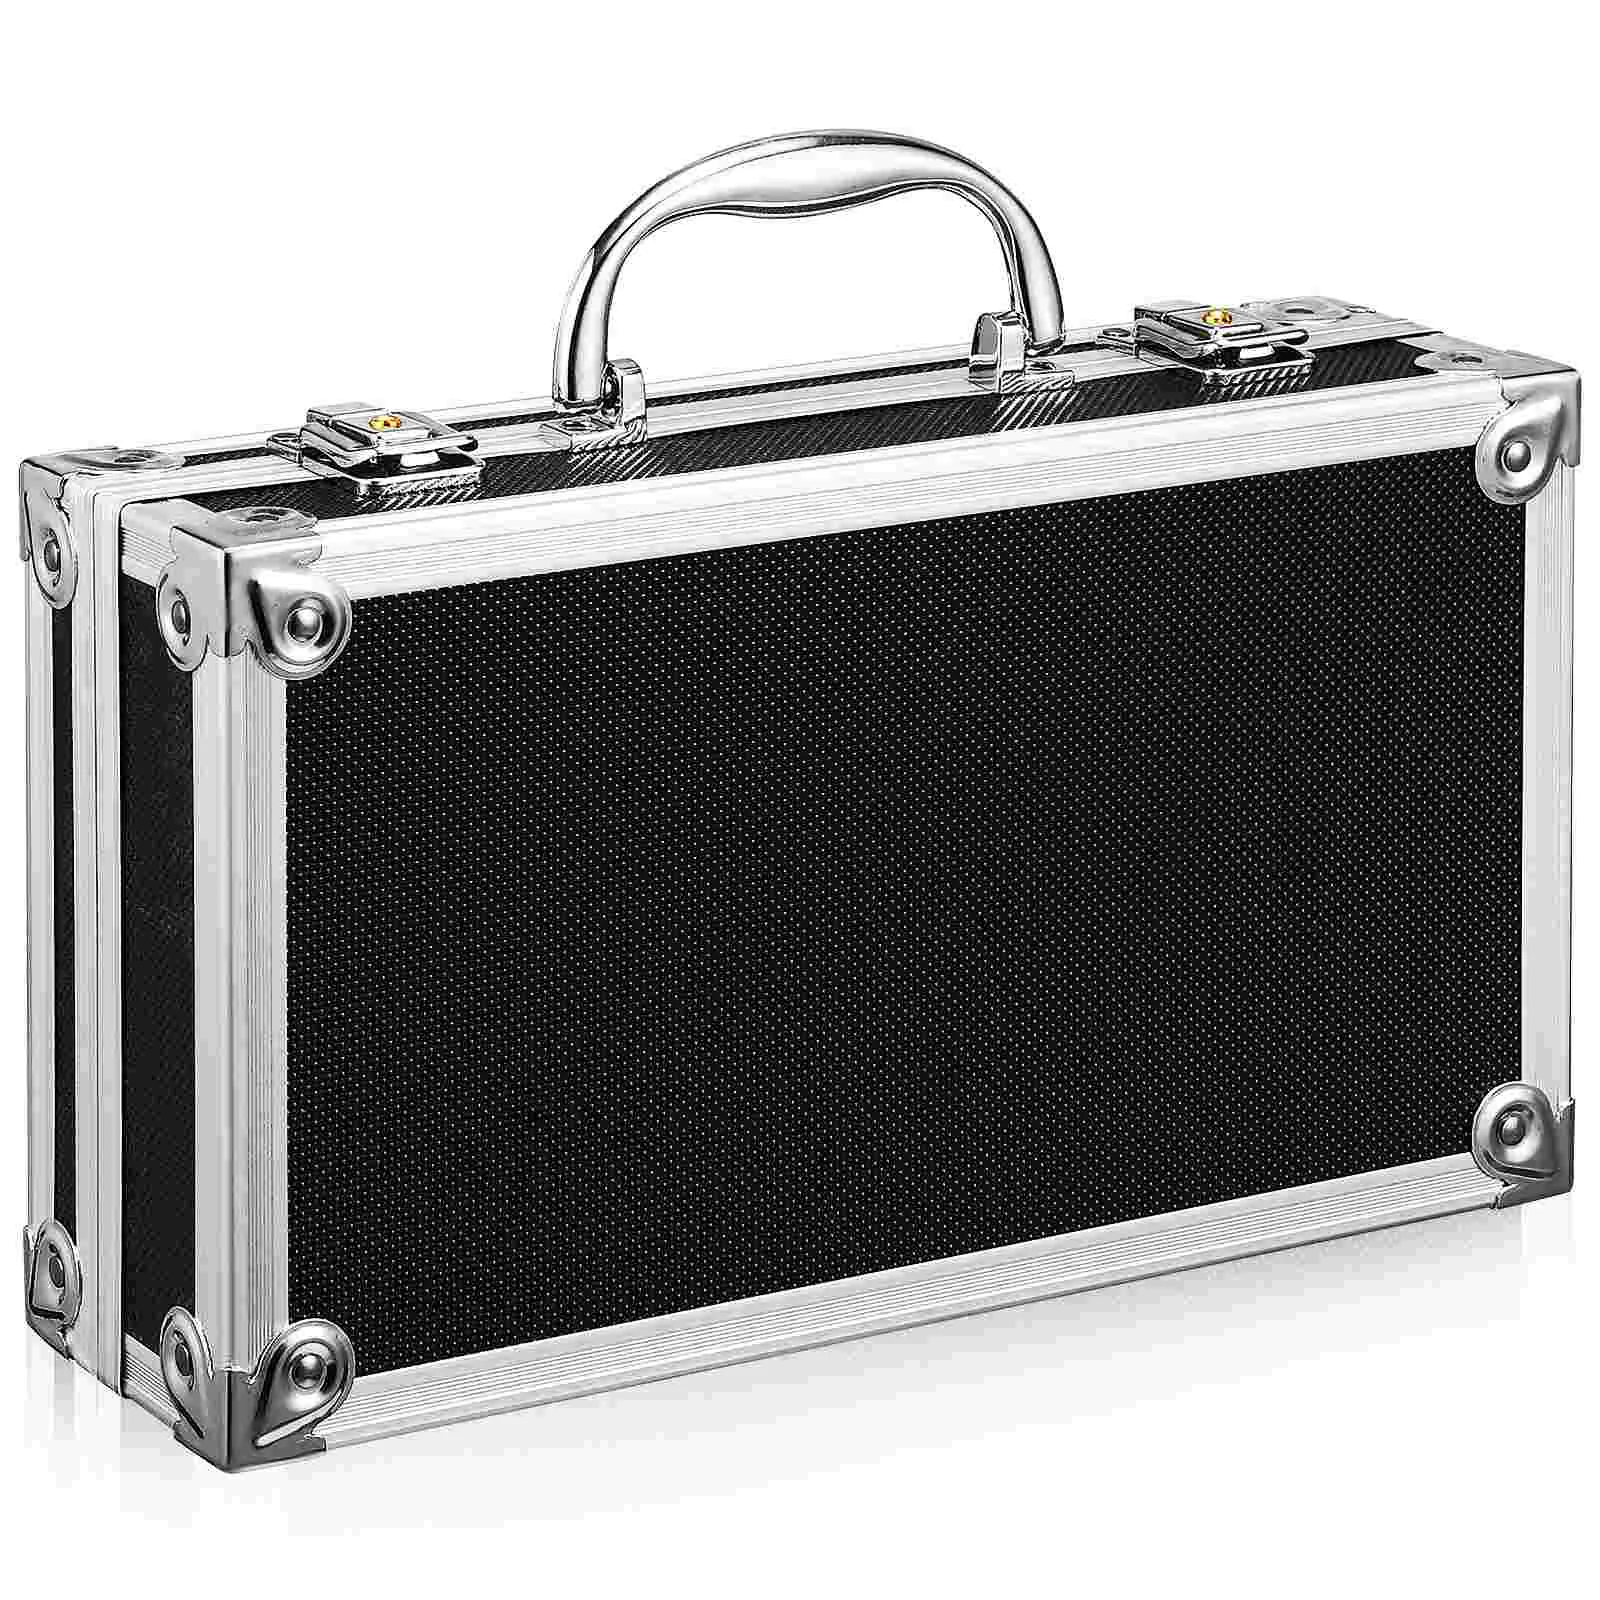 

Eringogo Aluminum Case 12Inch Lock Metal Briefcase Diy Customizable Foam Padded Hard Aluminum Carrying Case Universal Microphone